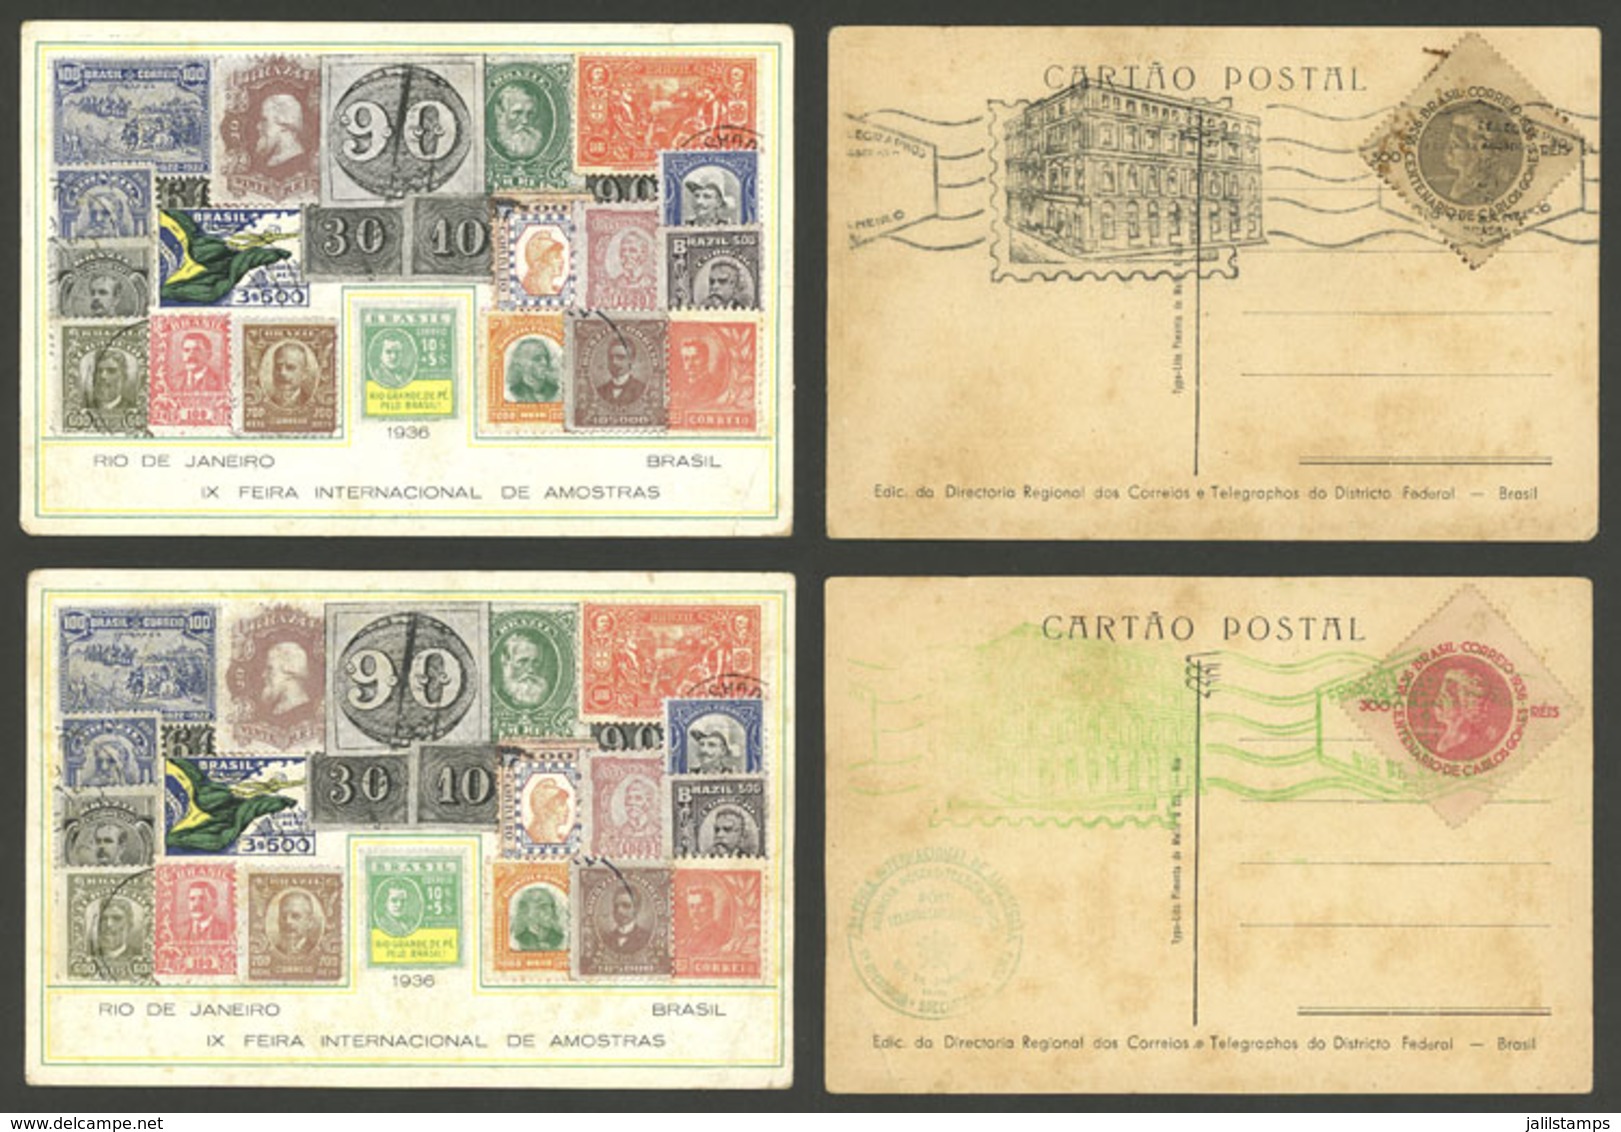 BRAZIL: Intl. Fair Of Rio 1936, 2 Nice Cards With Special Postmarks, Minor Defects, Very Nice! - Rio De Janeiro